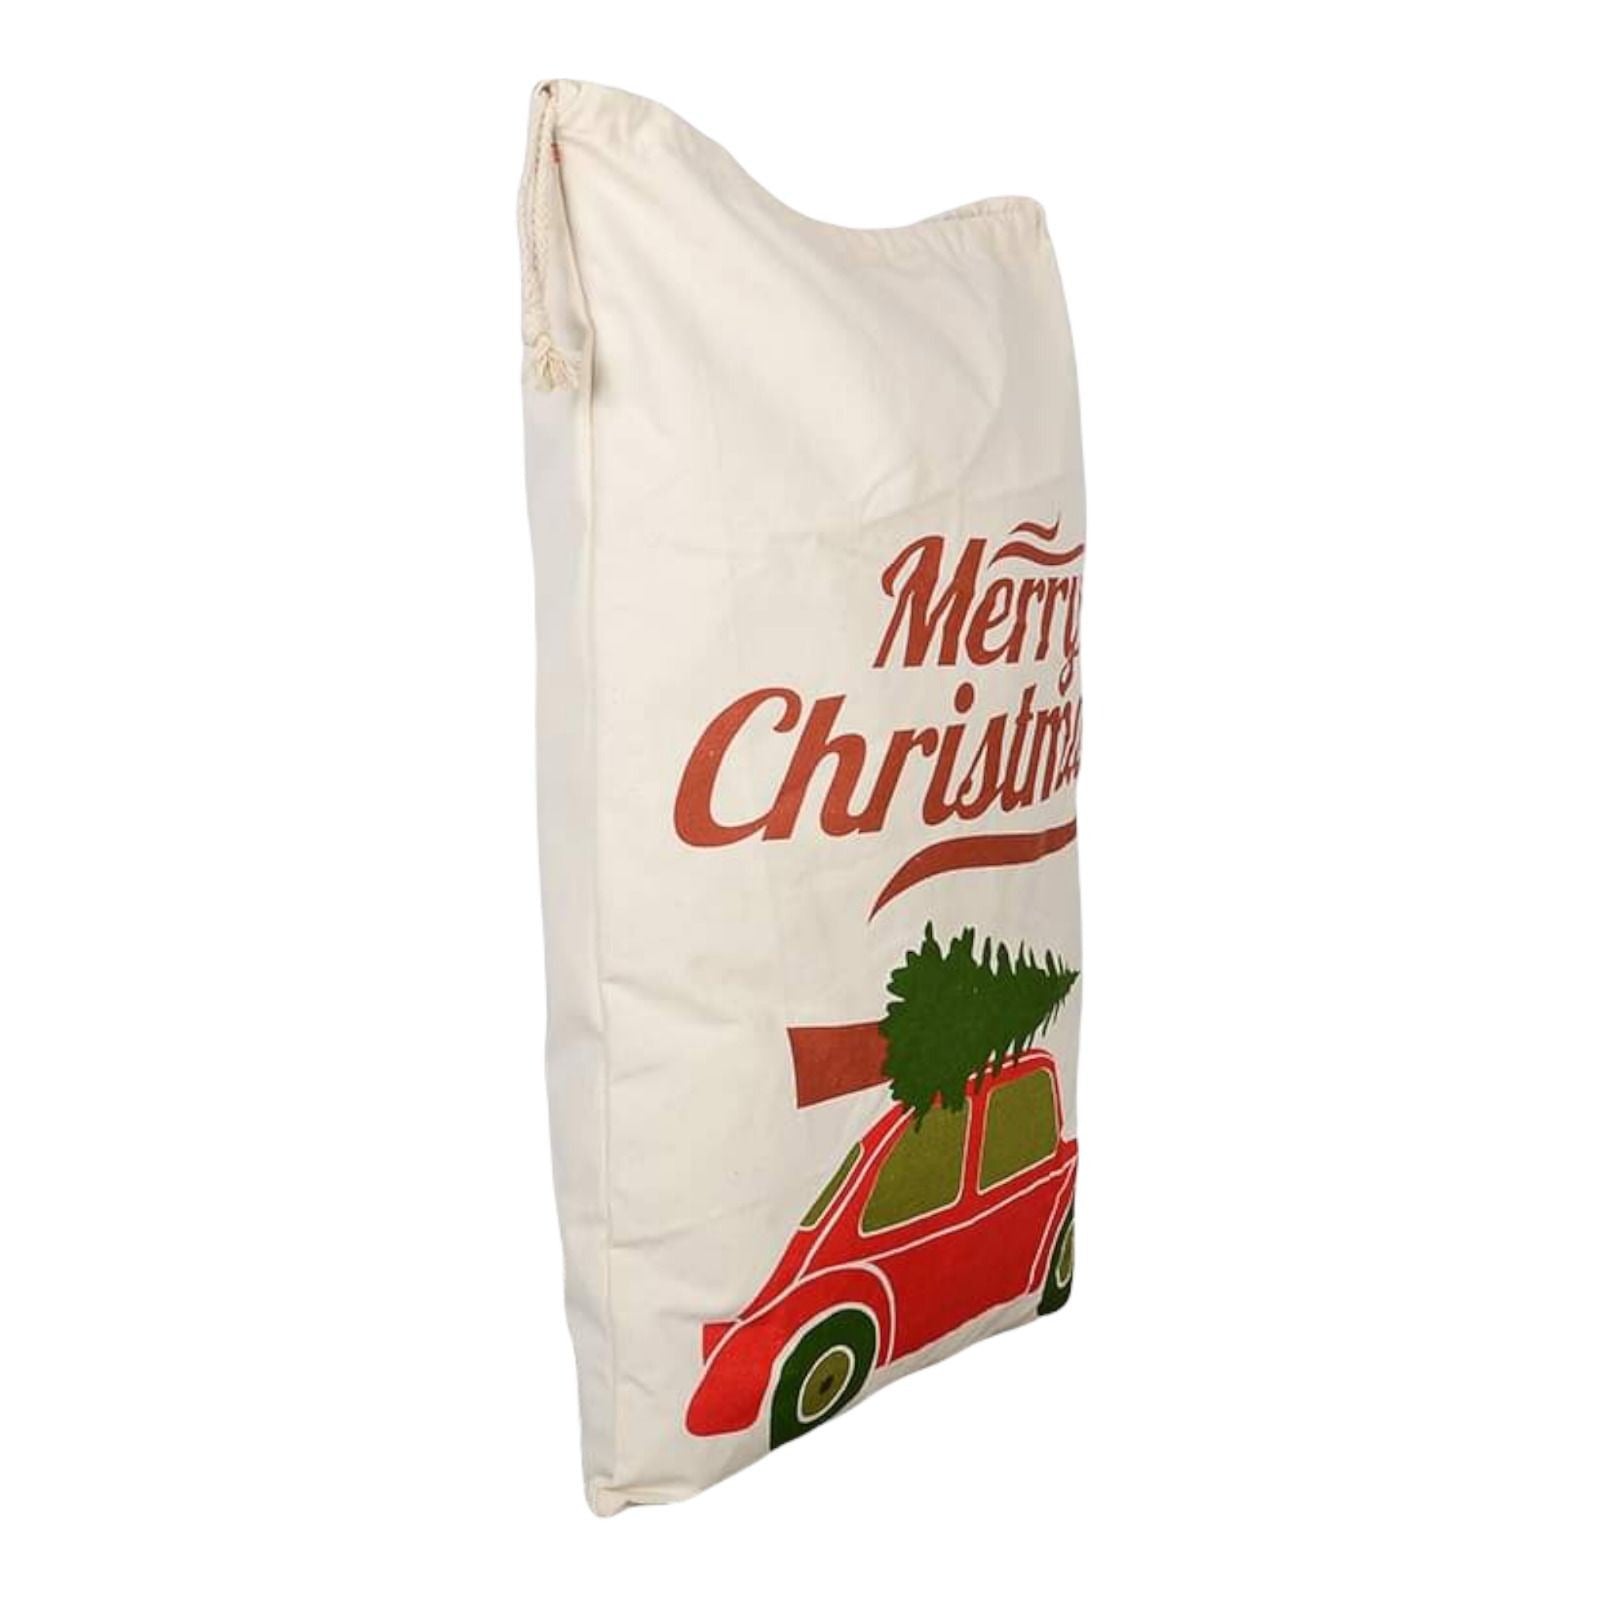 Car & Tree Design Christmas Bag Santa Claus Sack Cotton XMAS Childrens Gift Bags